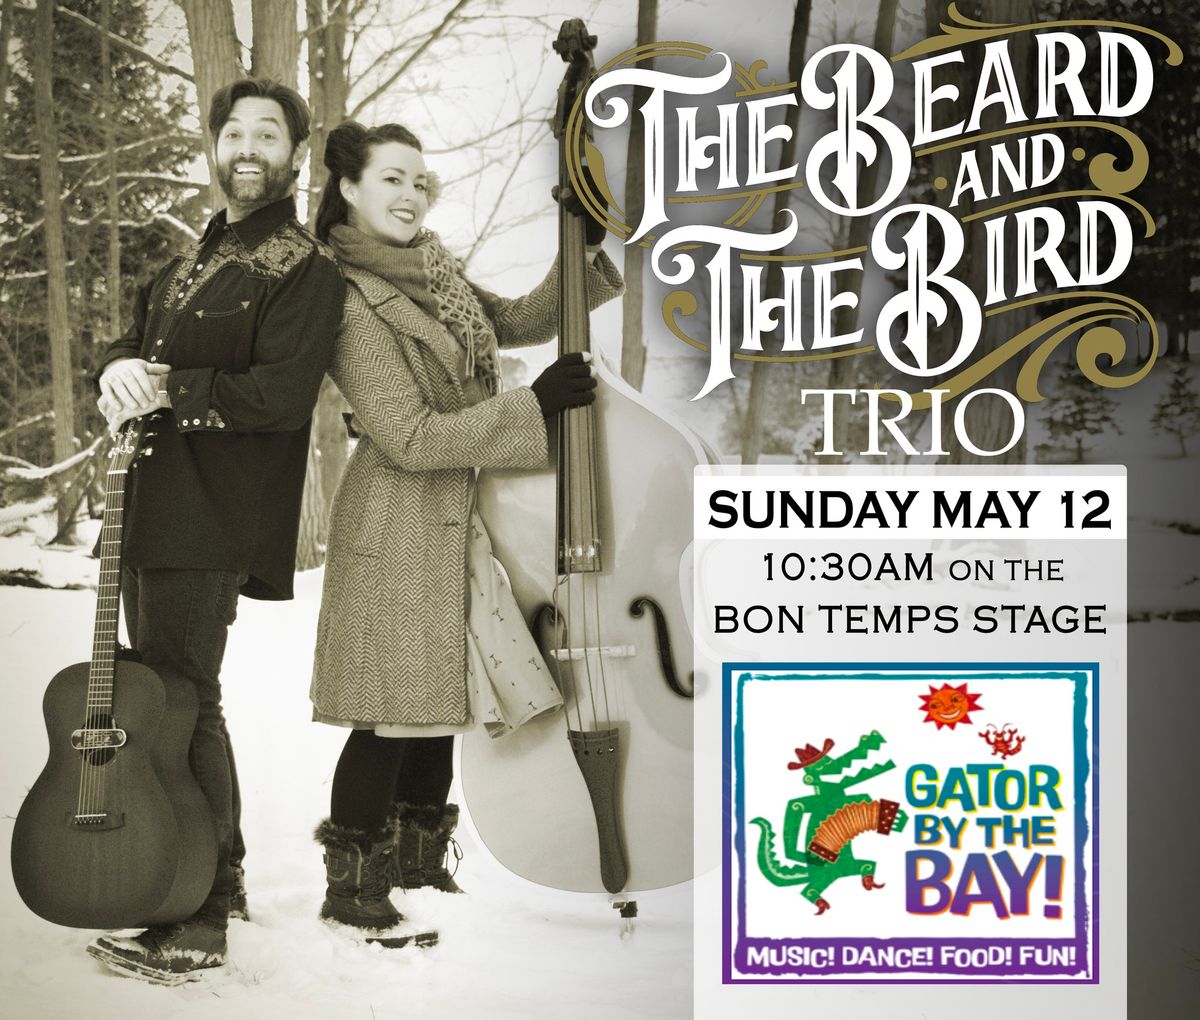 The Beard & The Bird Trio @ Gator by the Bay!